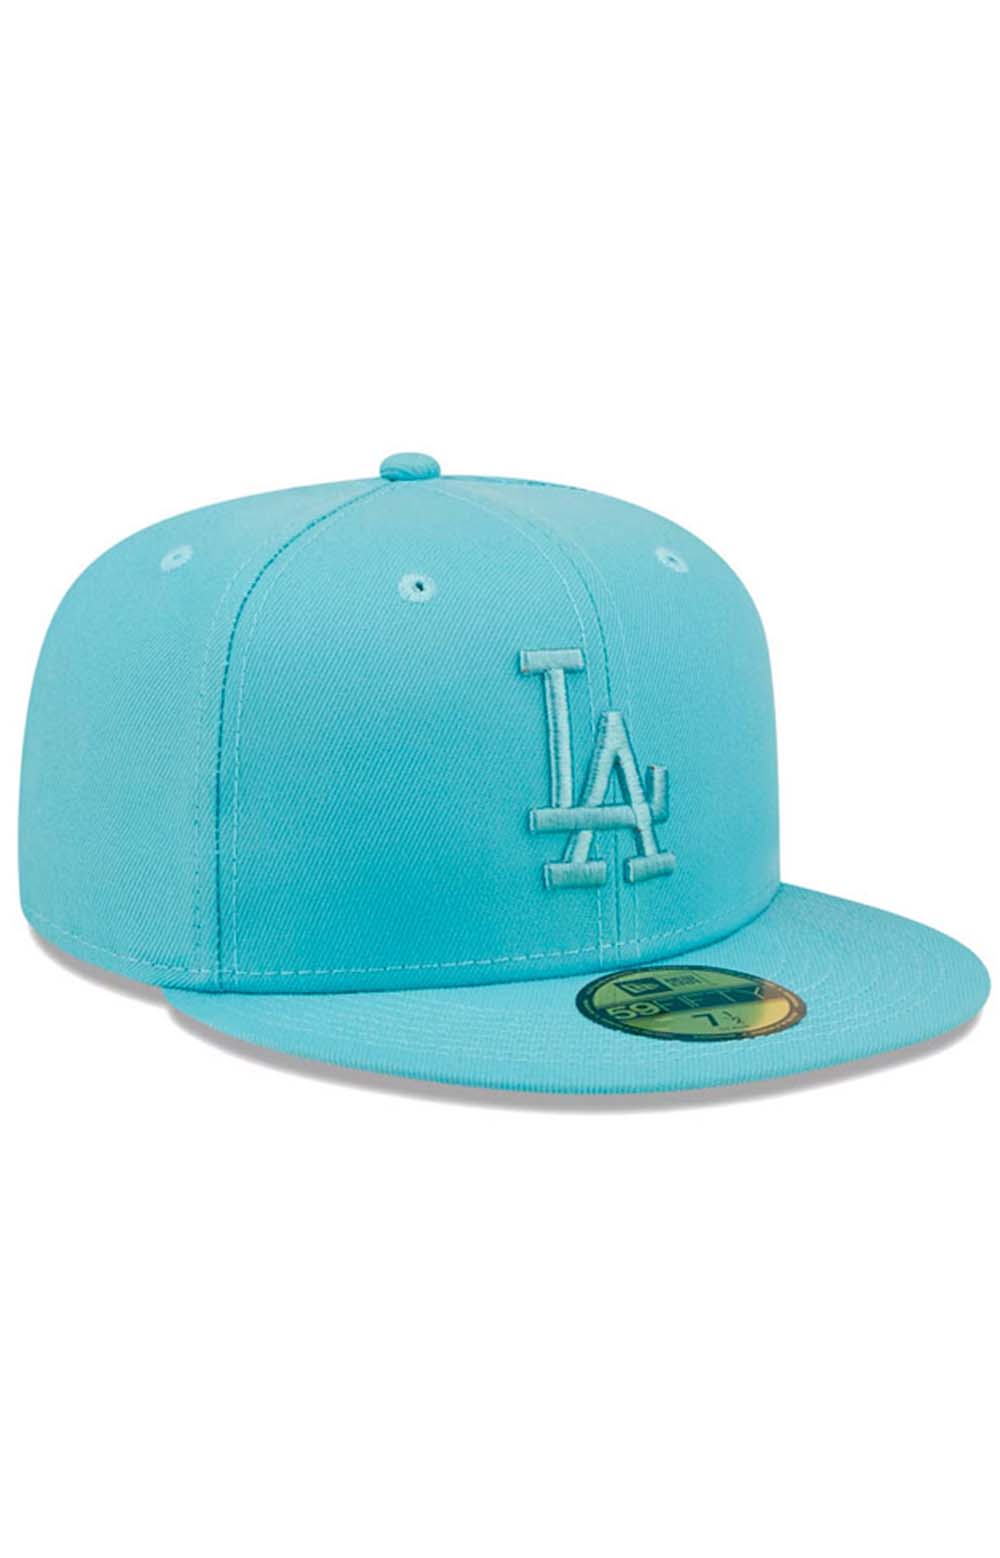 LA Dodgers Color Pack 5950 Fitted Cap